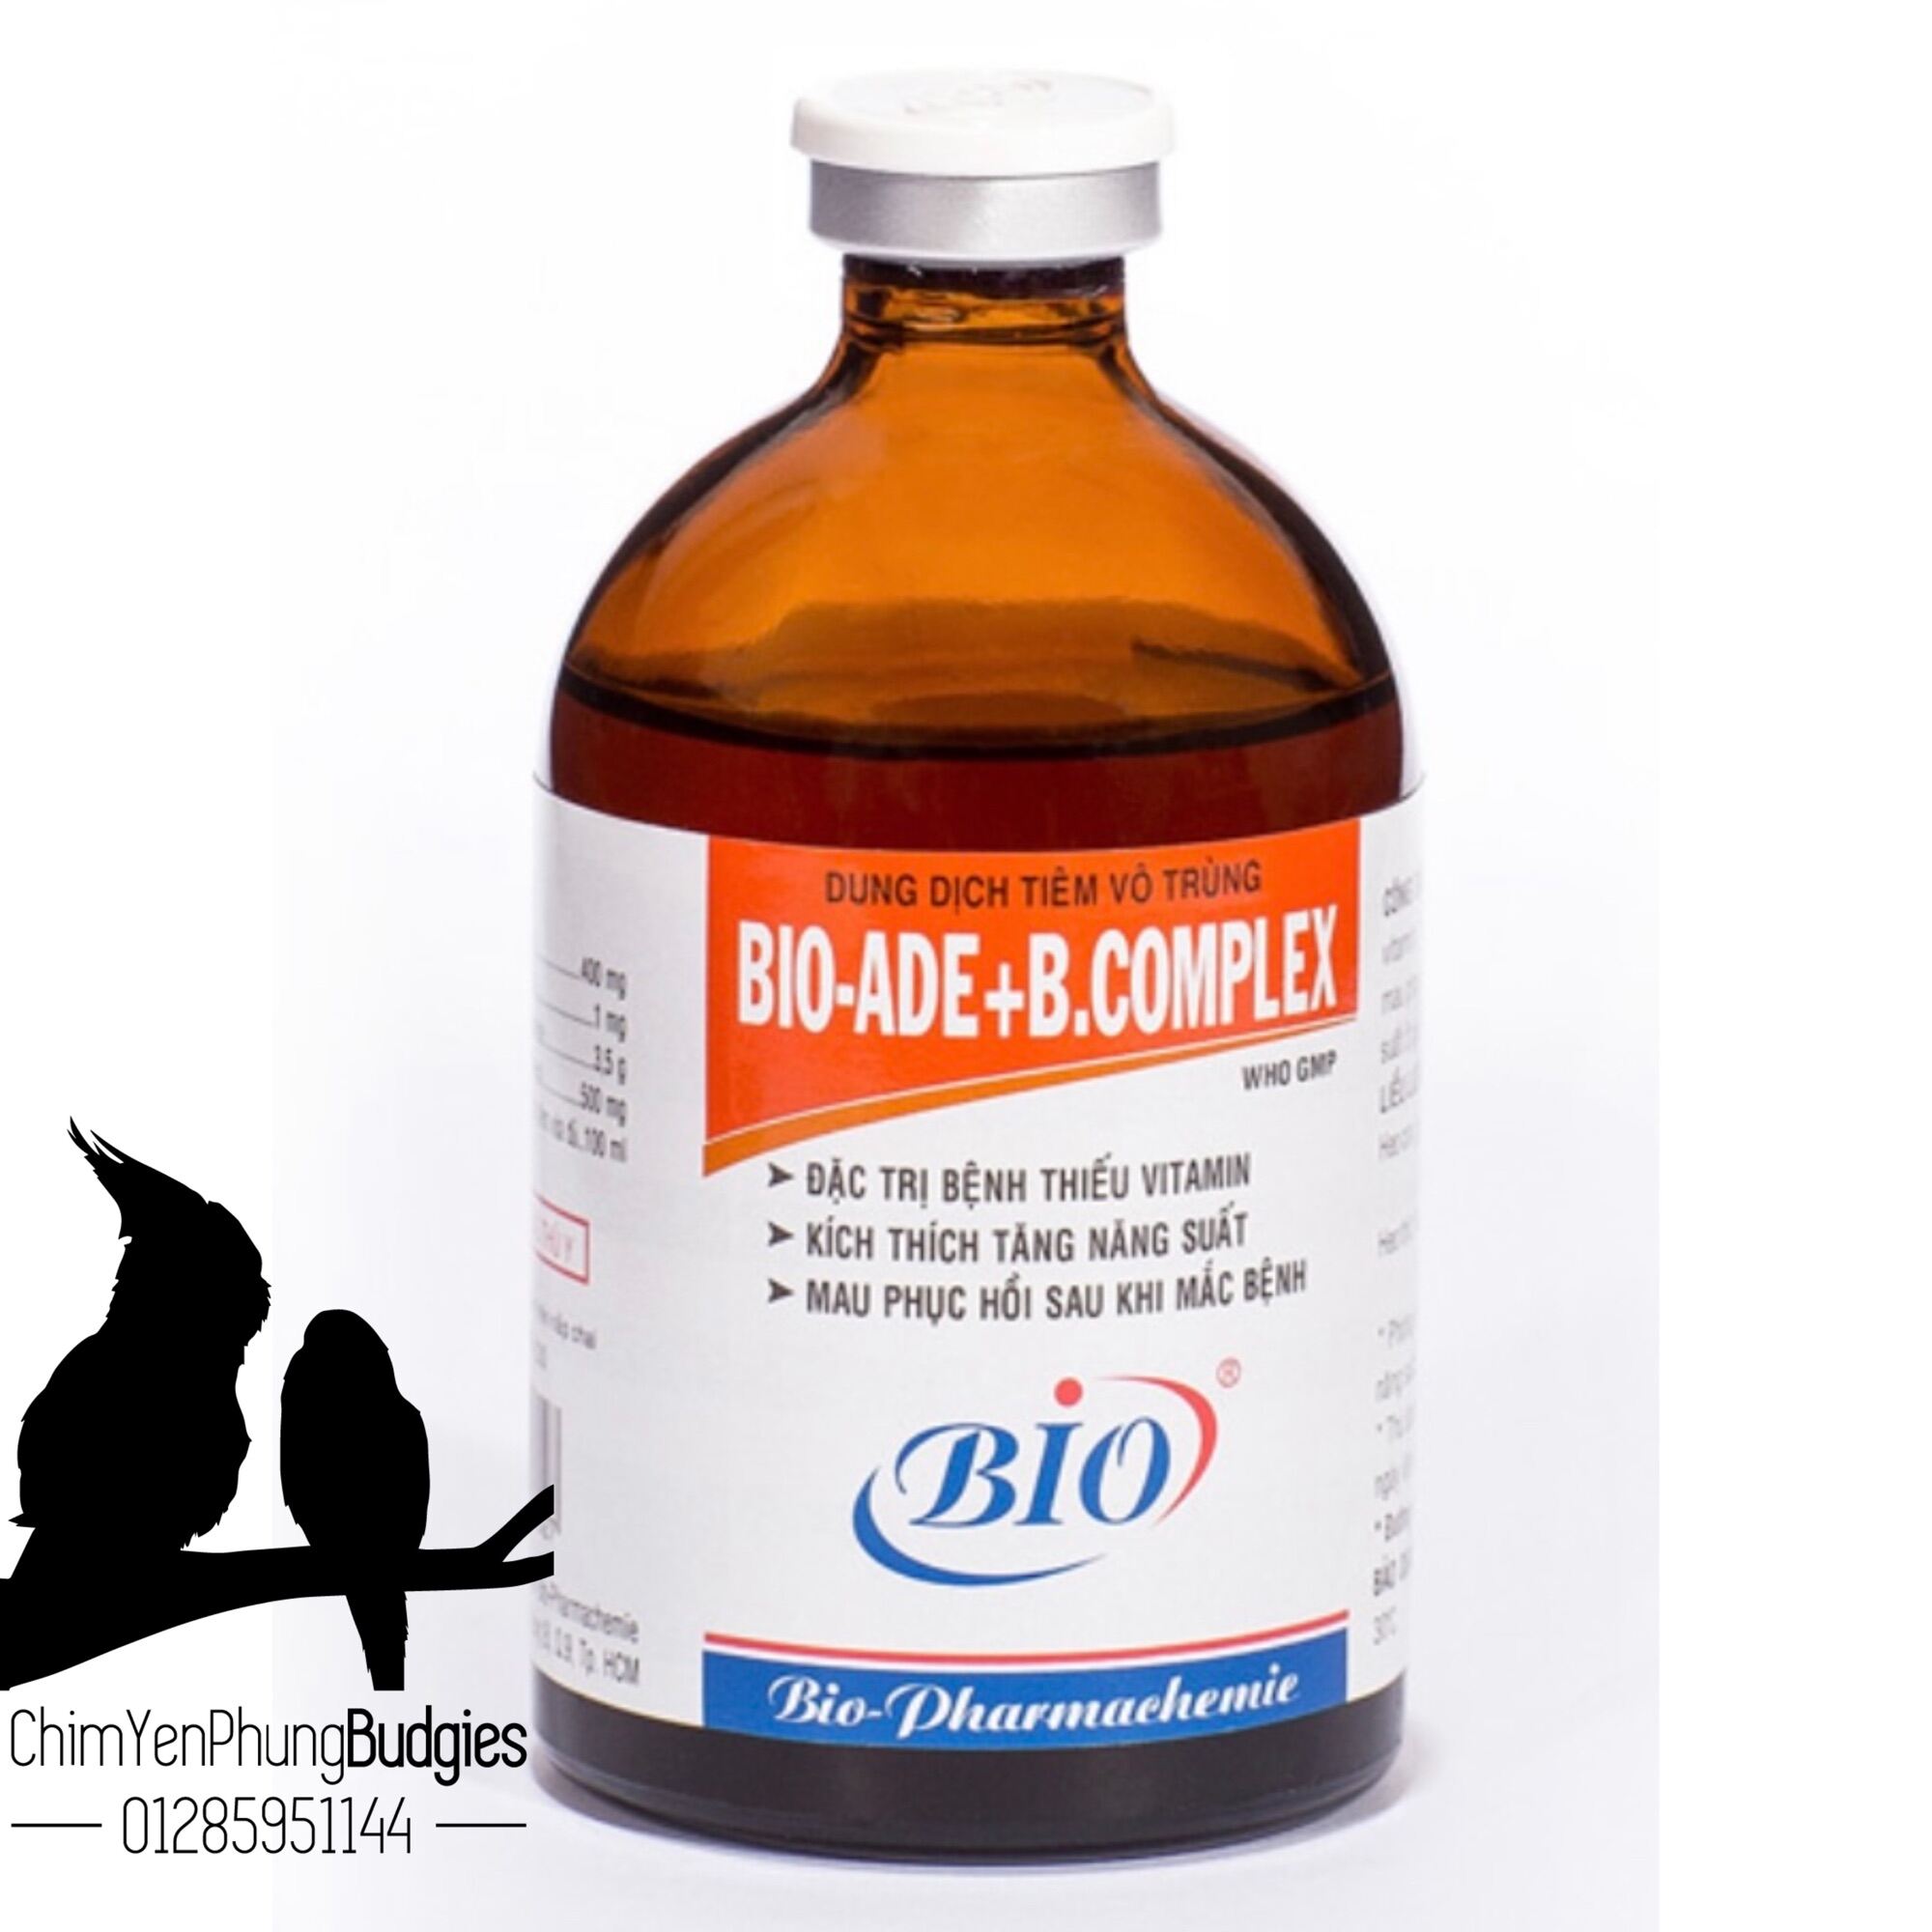 BIO ADE+B.COMPLEX 100ml bổ sung vitamin, phục hồi sức khoẻ cho vật nuôi.